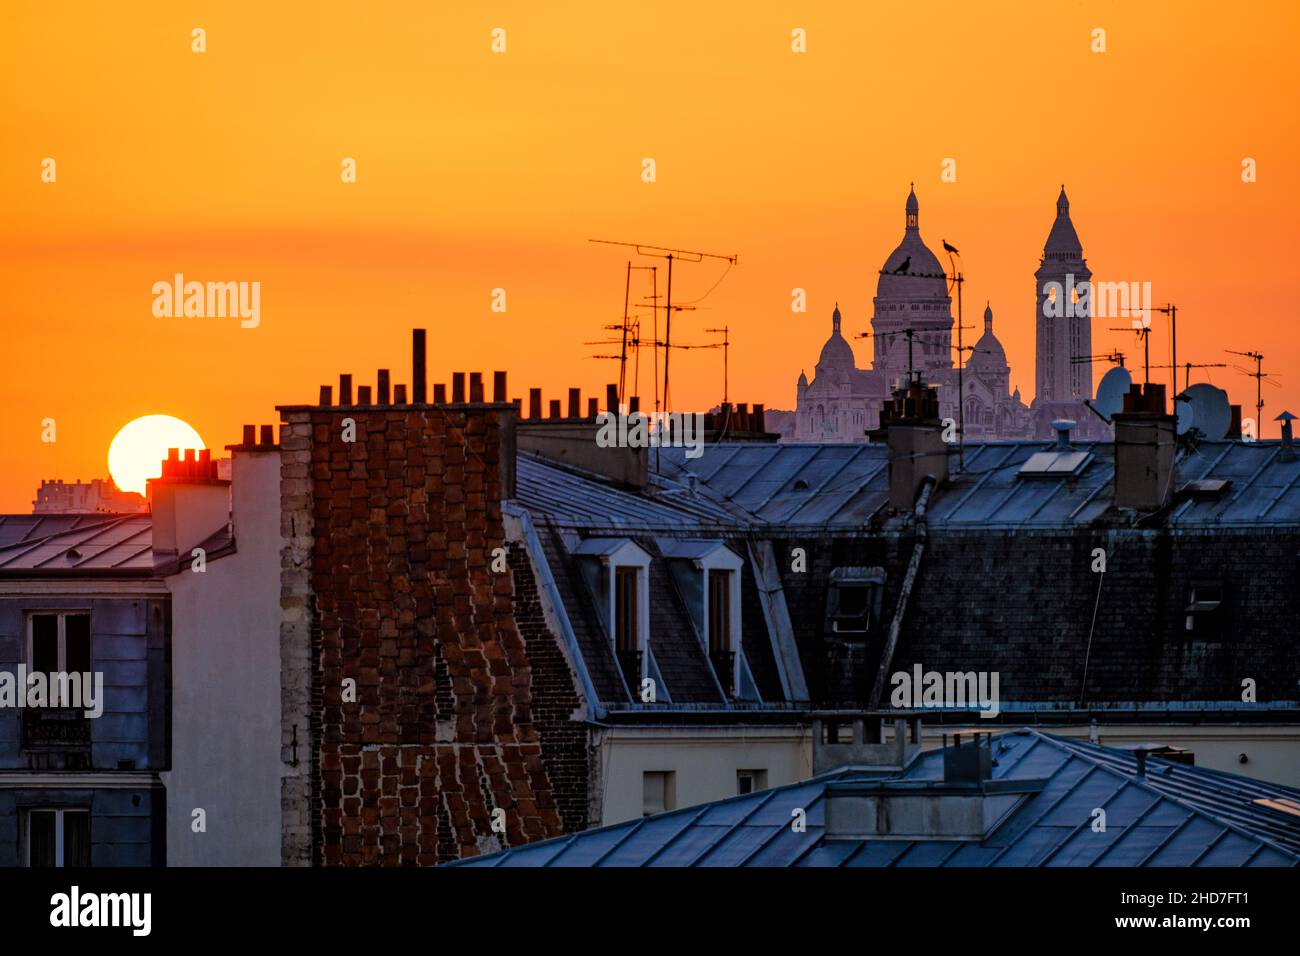 Basilica Sacre Coeur in Paris at sunset with orange sky Stock Photo